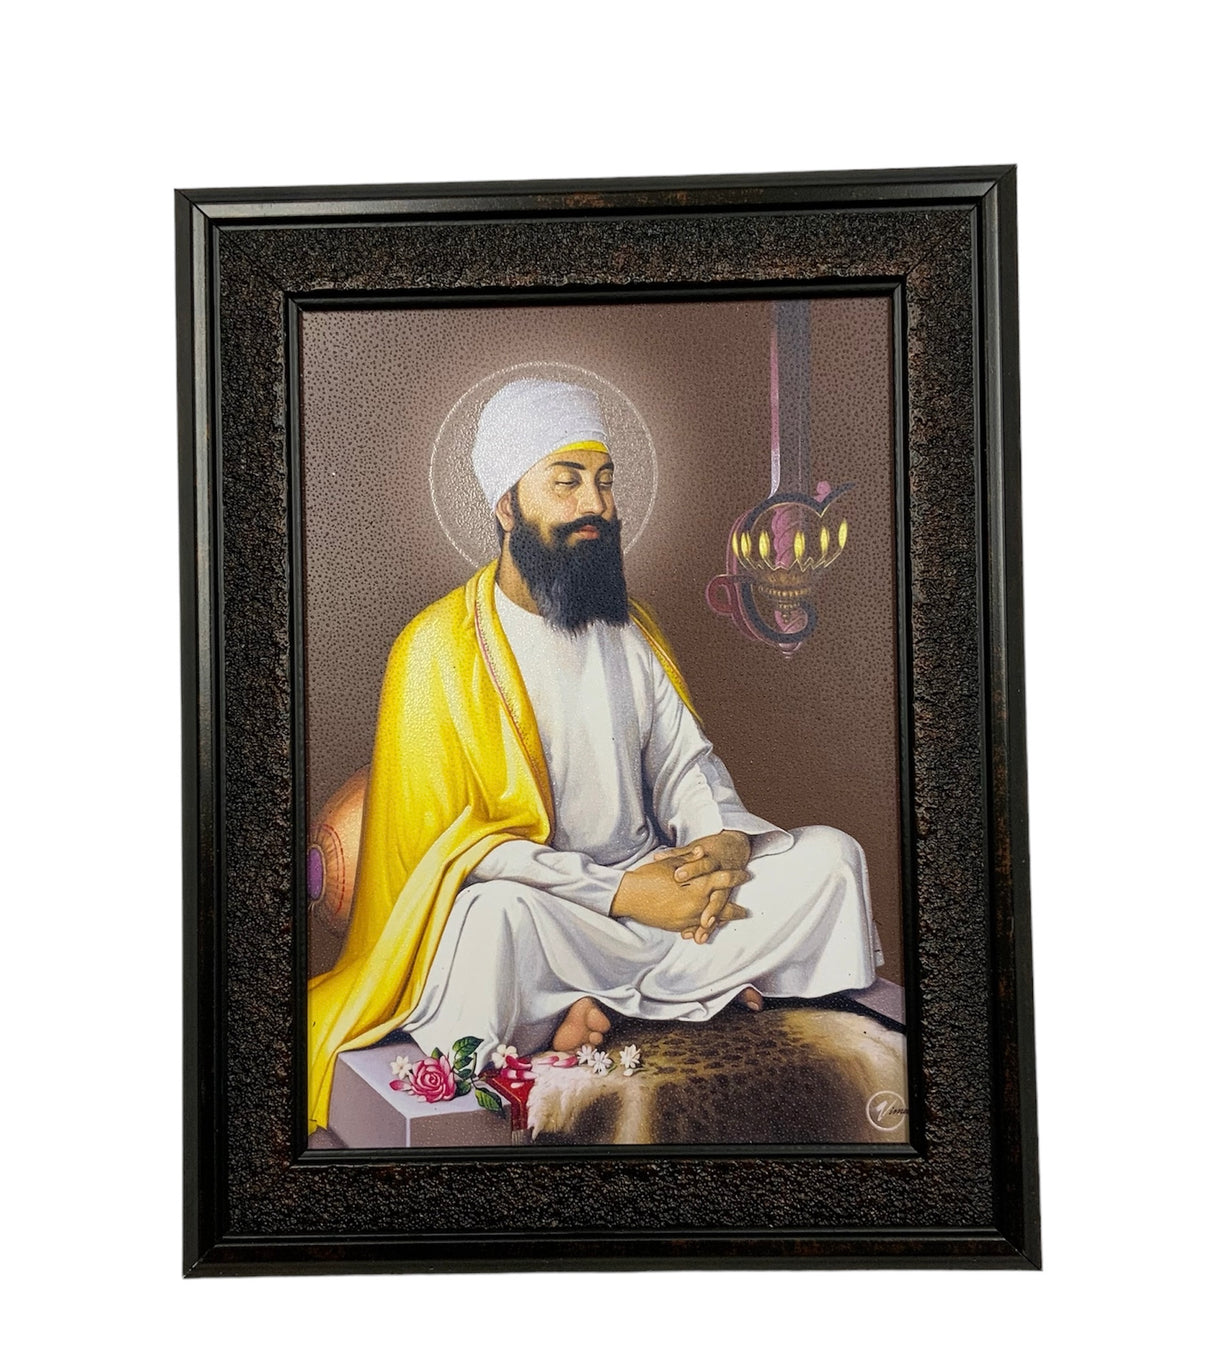 Guru Tegh Bahadur Ji Photo Frame with Stand 7X9 inches